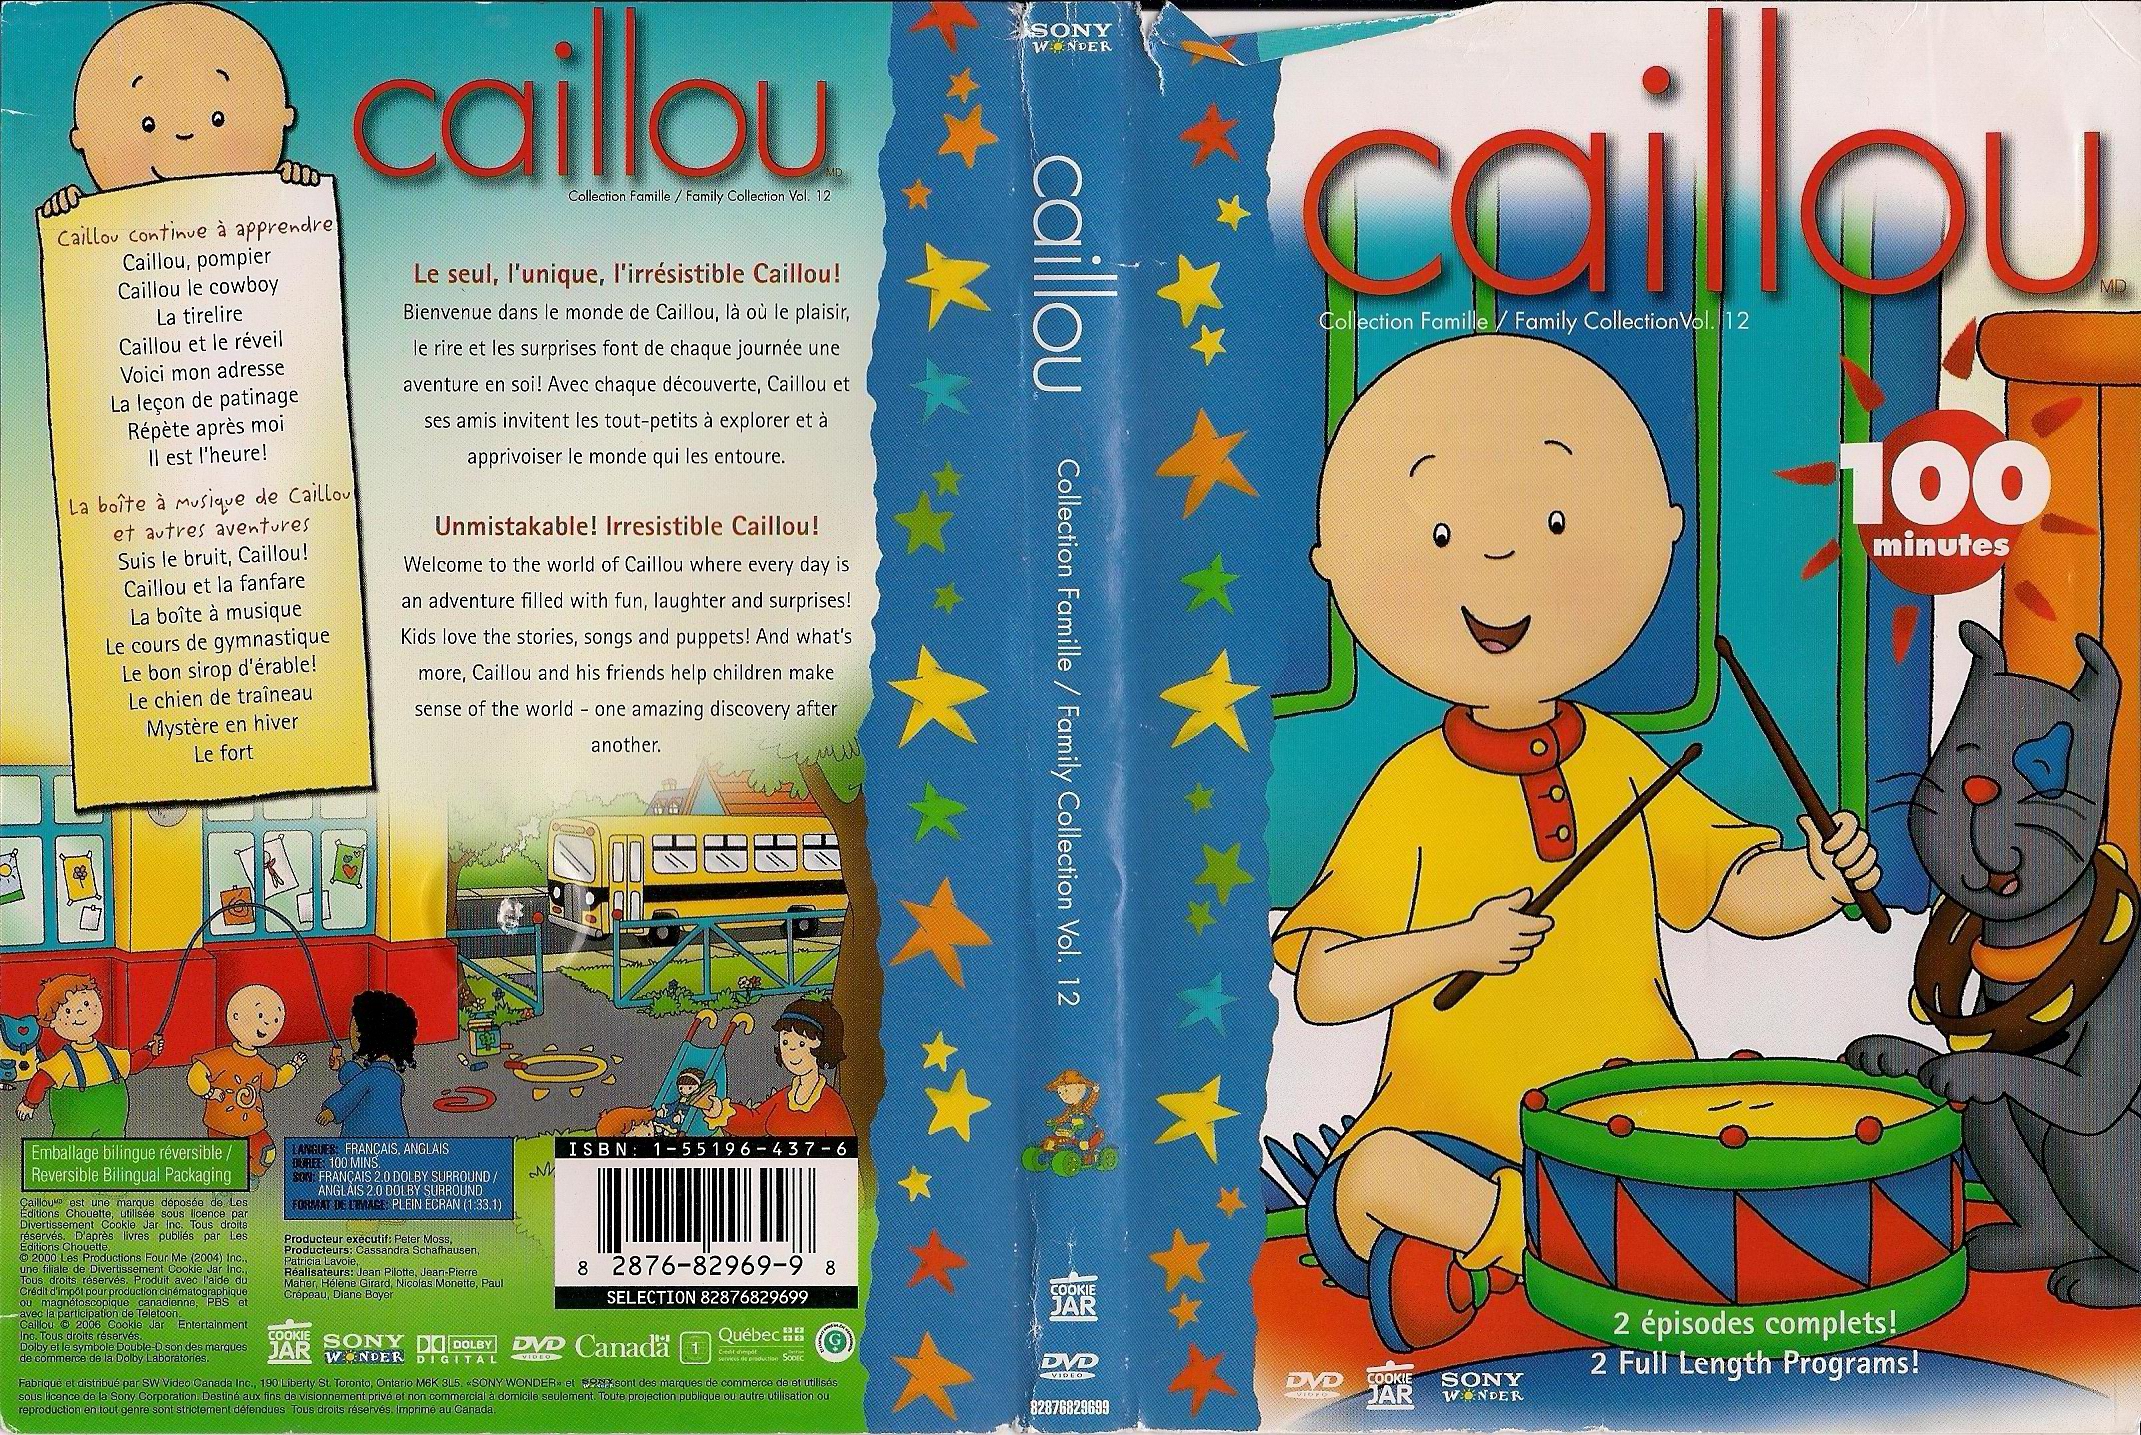 Jaquette DVD Caillou vol 12 (Canadienne)